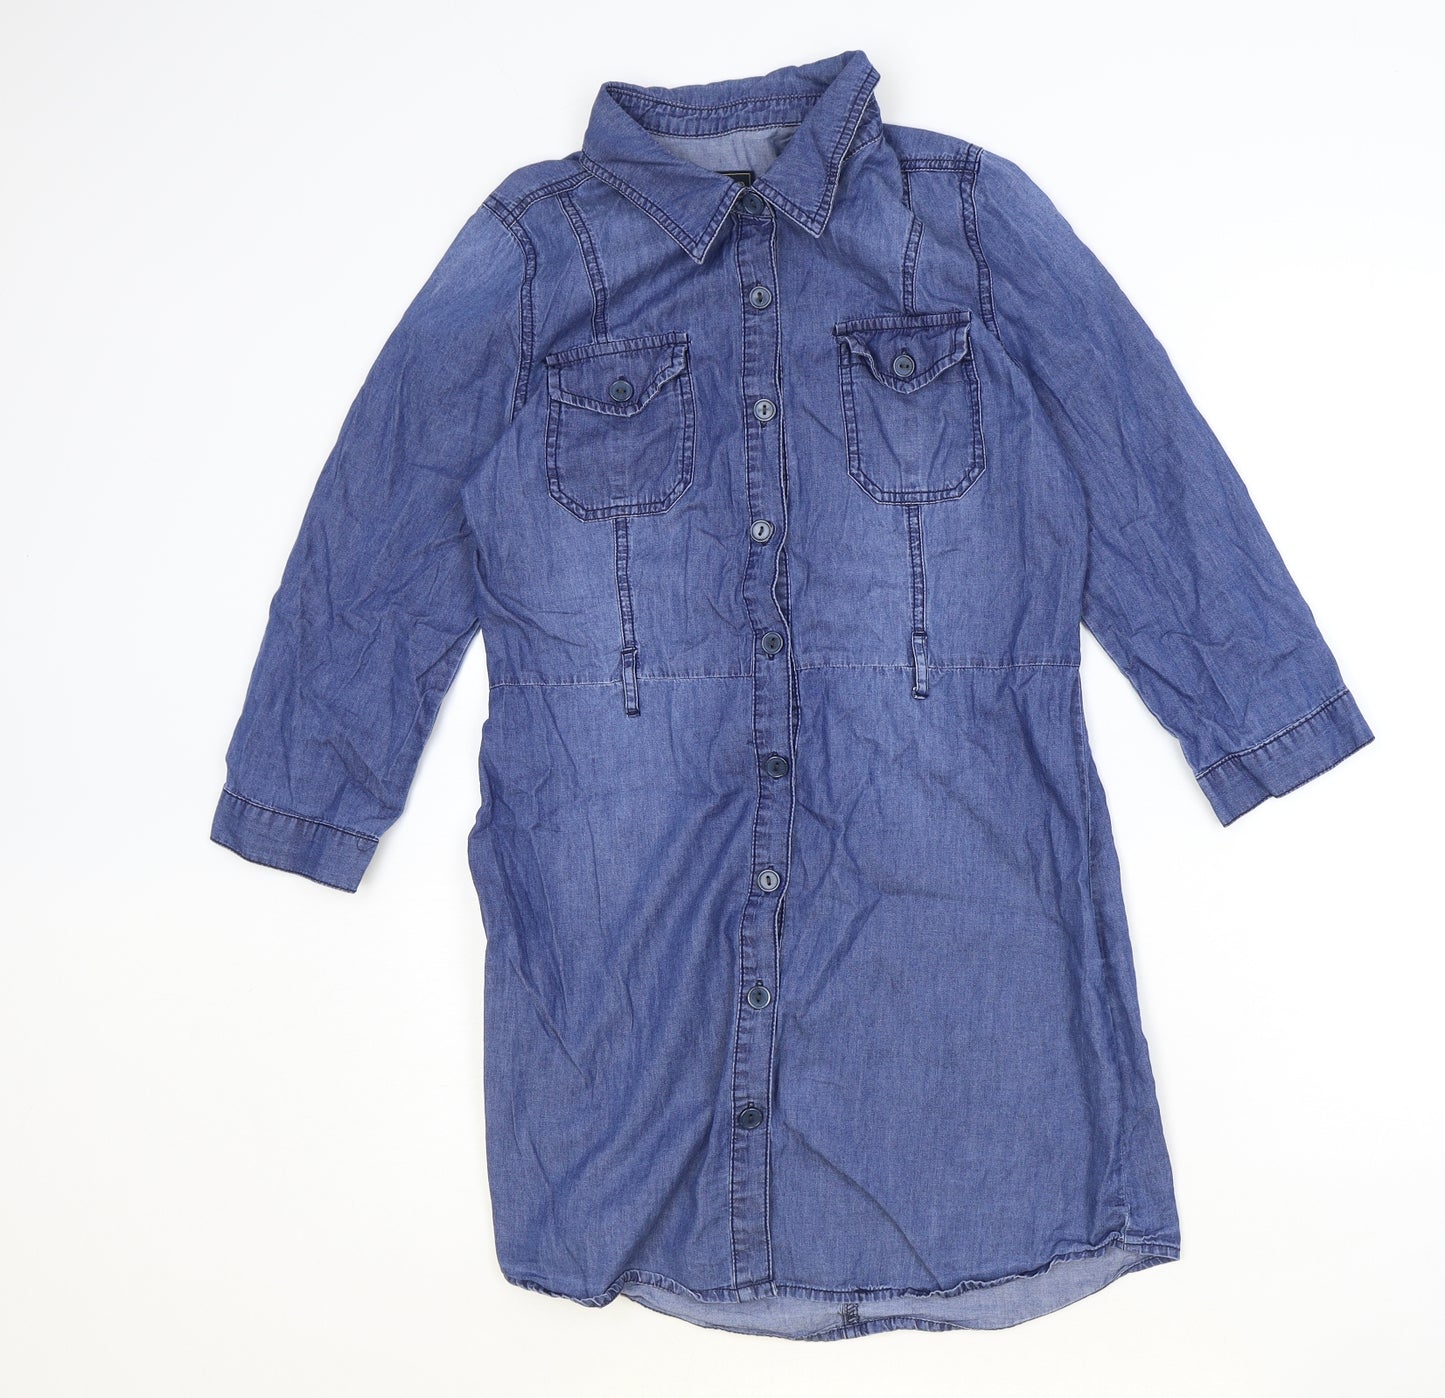 CI SONO Womens Blue 100% Cotton Shirt Dress Size M Collared Button